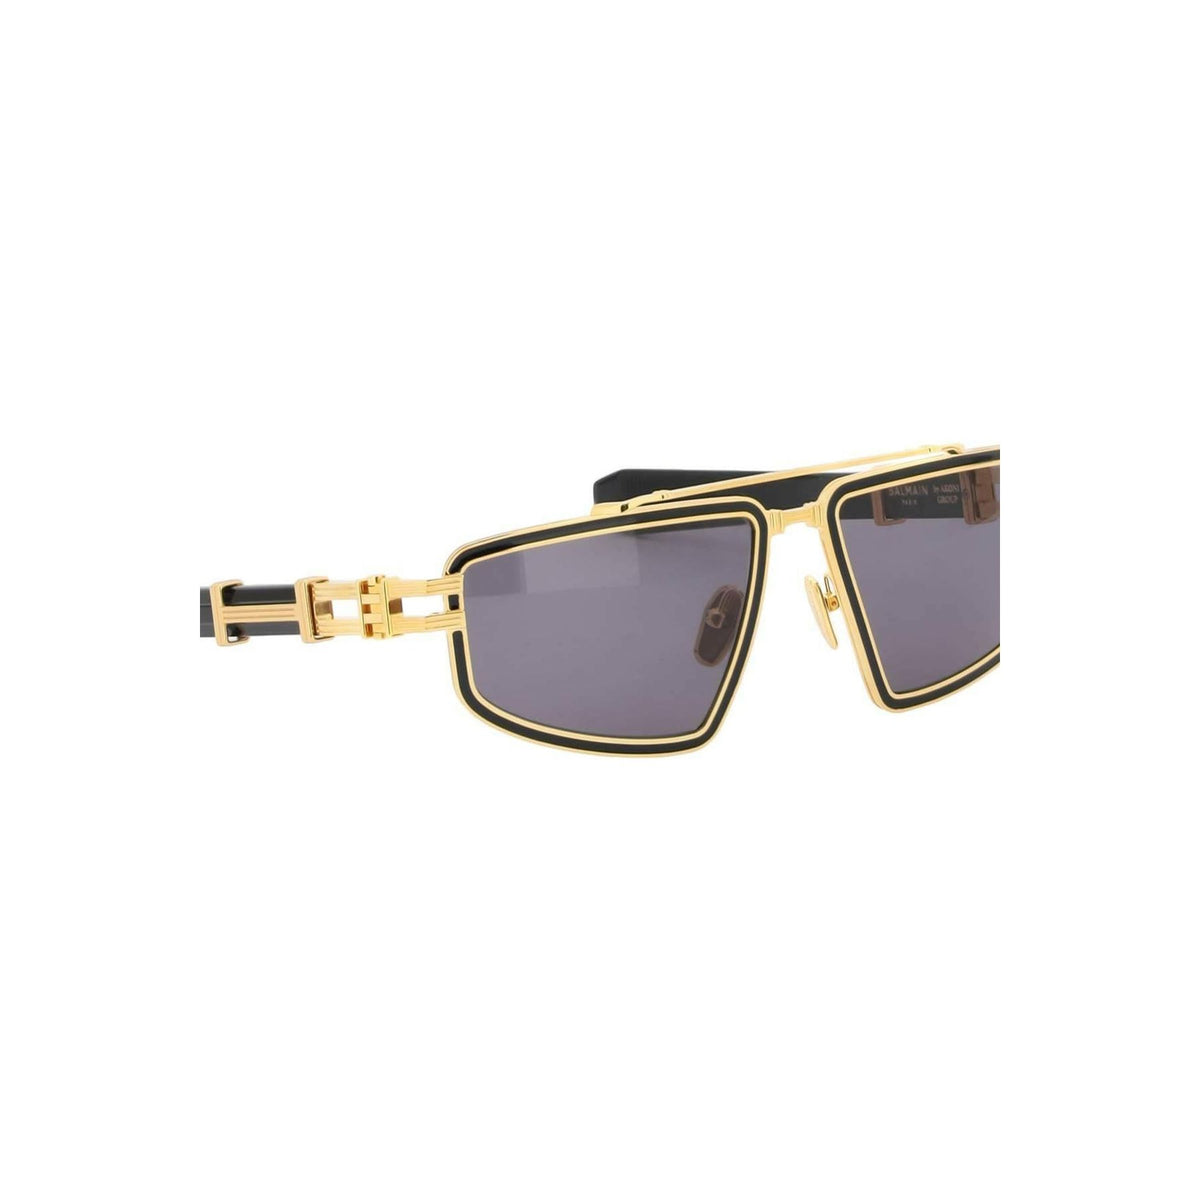 Gold and Black Titan Sunglasses BALMAIN JOHN JULIA.